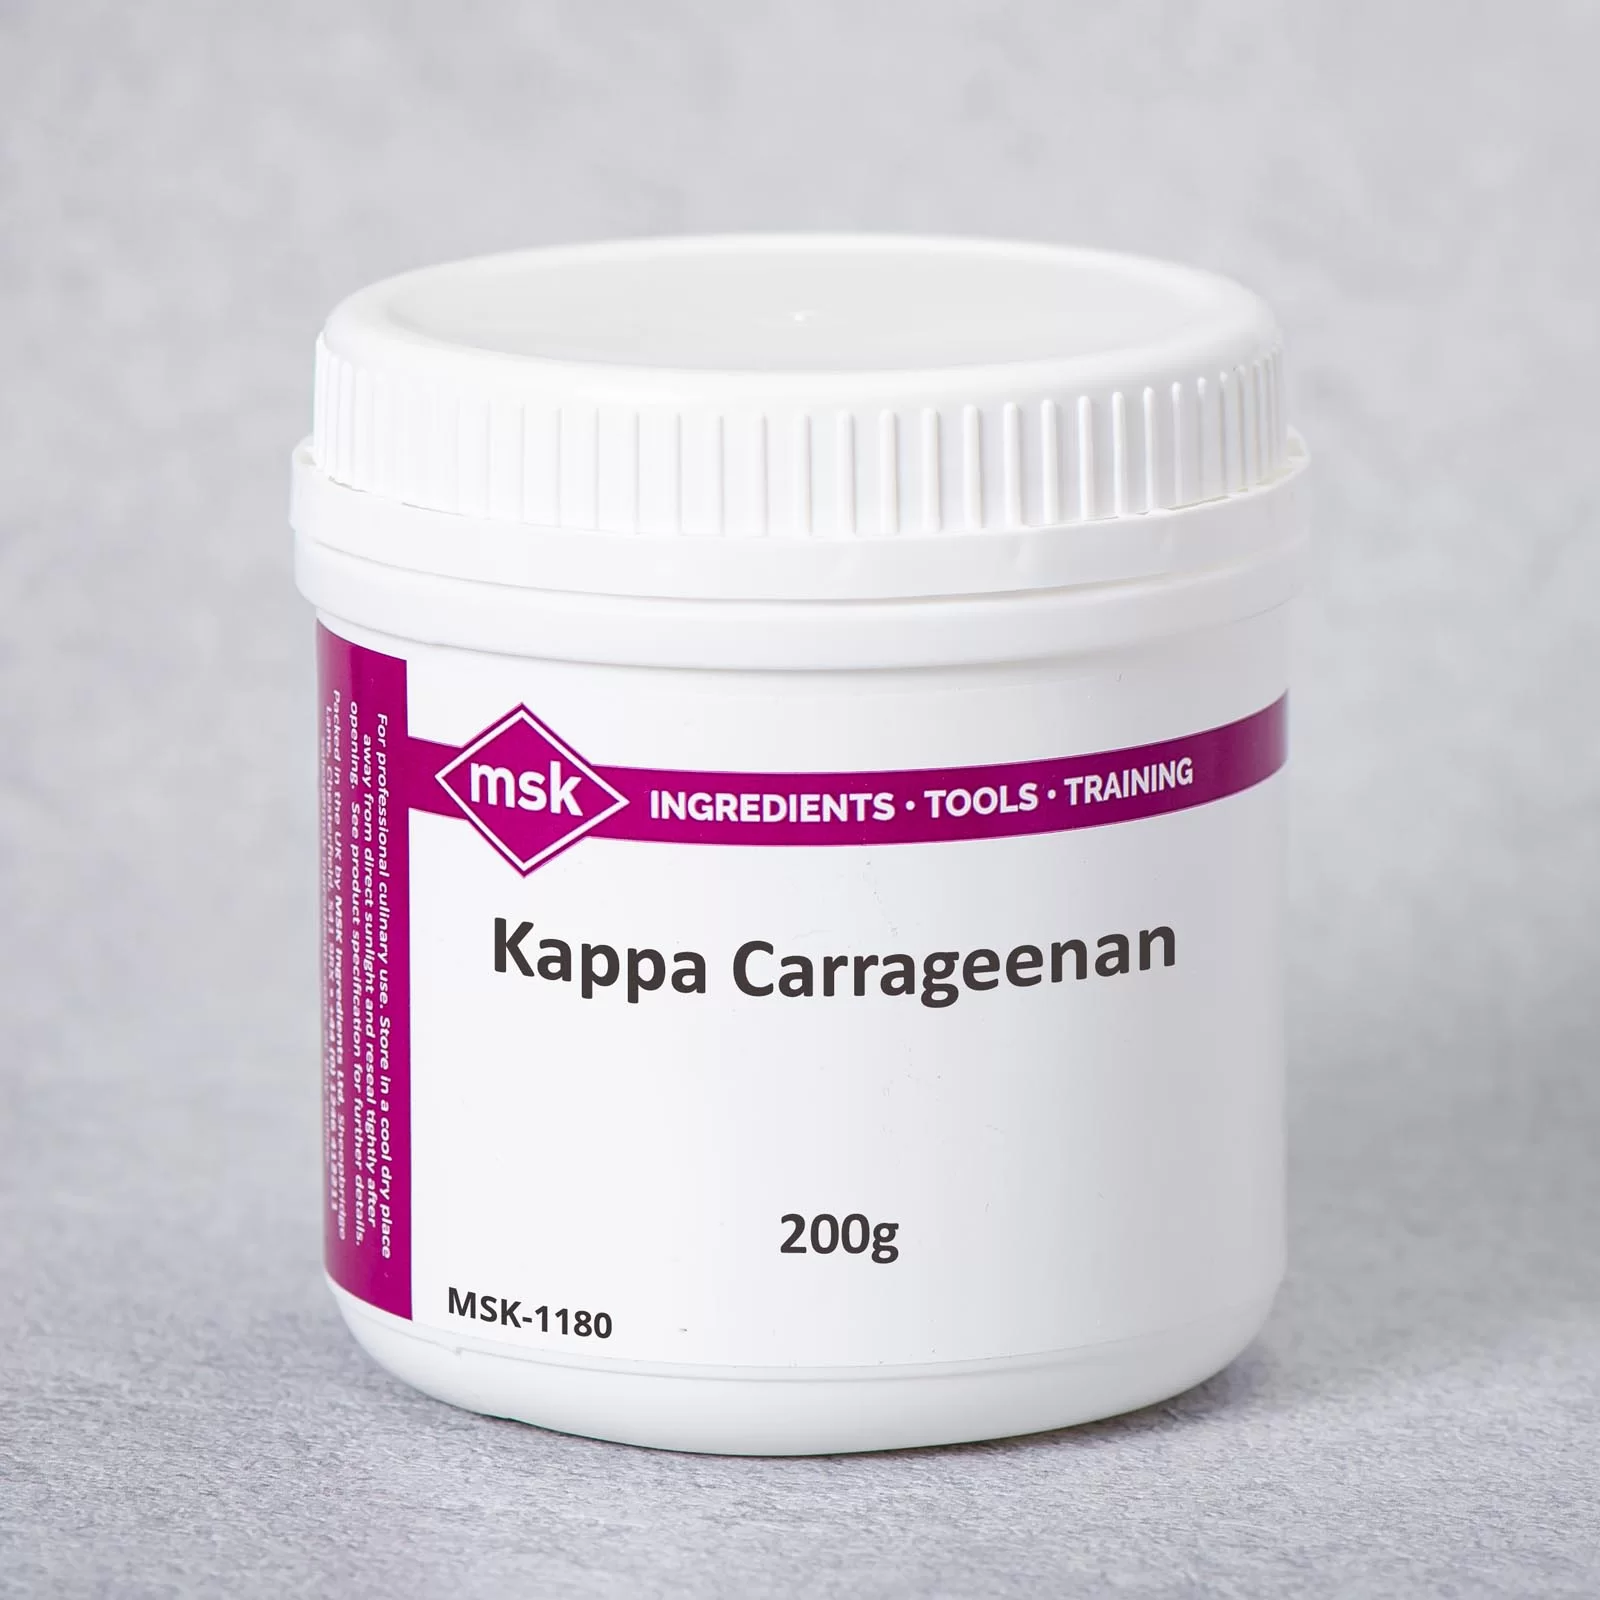 C41070-100.0 - Carrageenan, Kappa Type, 100 Grams